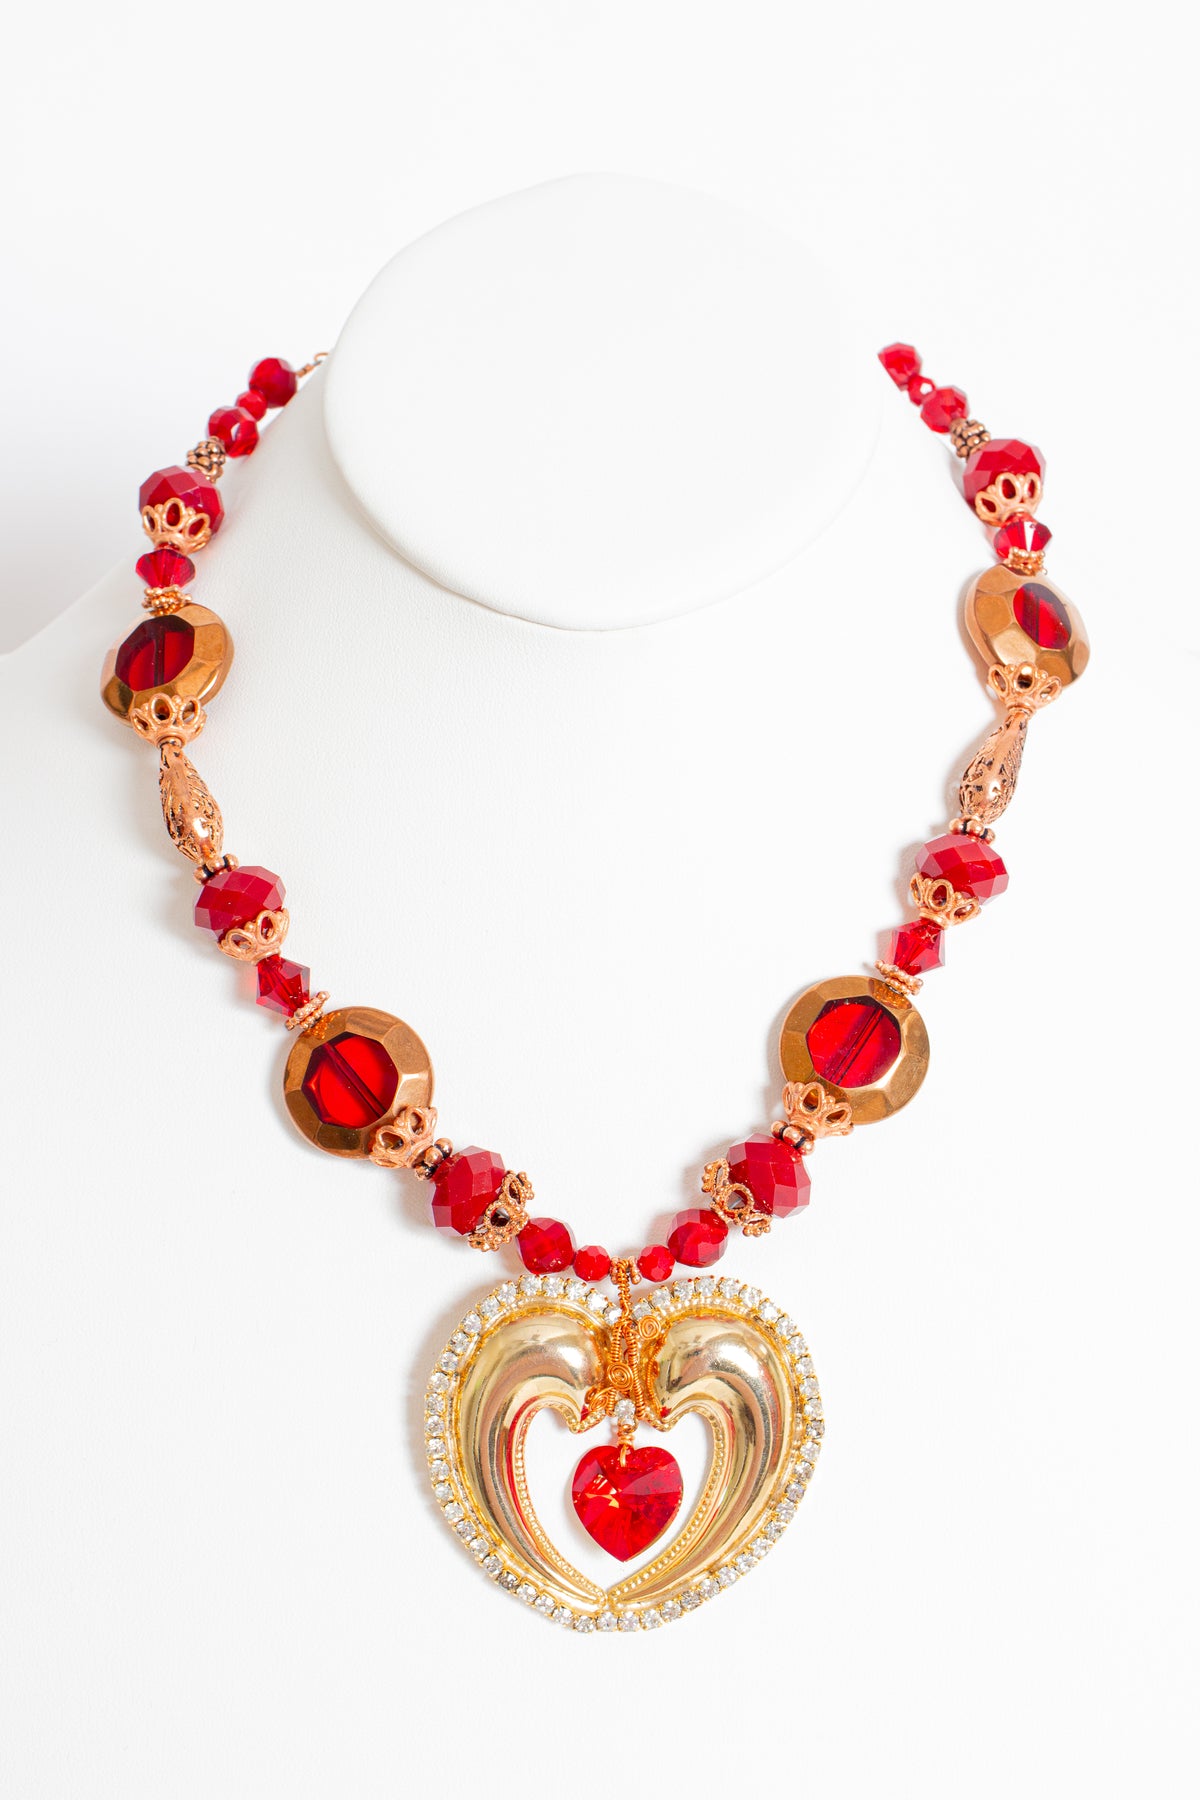 Romantic Yellow Gold Heart Pendant and Earrings Set